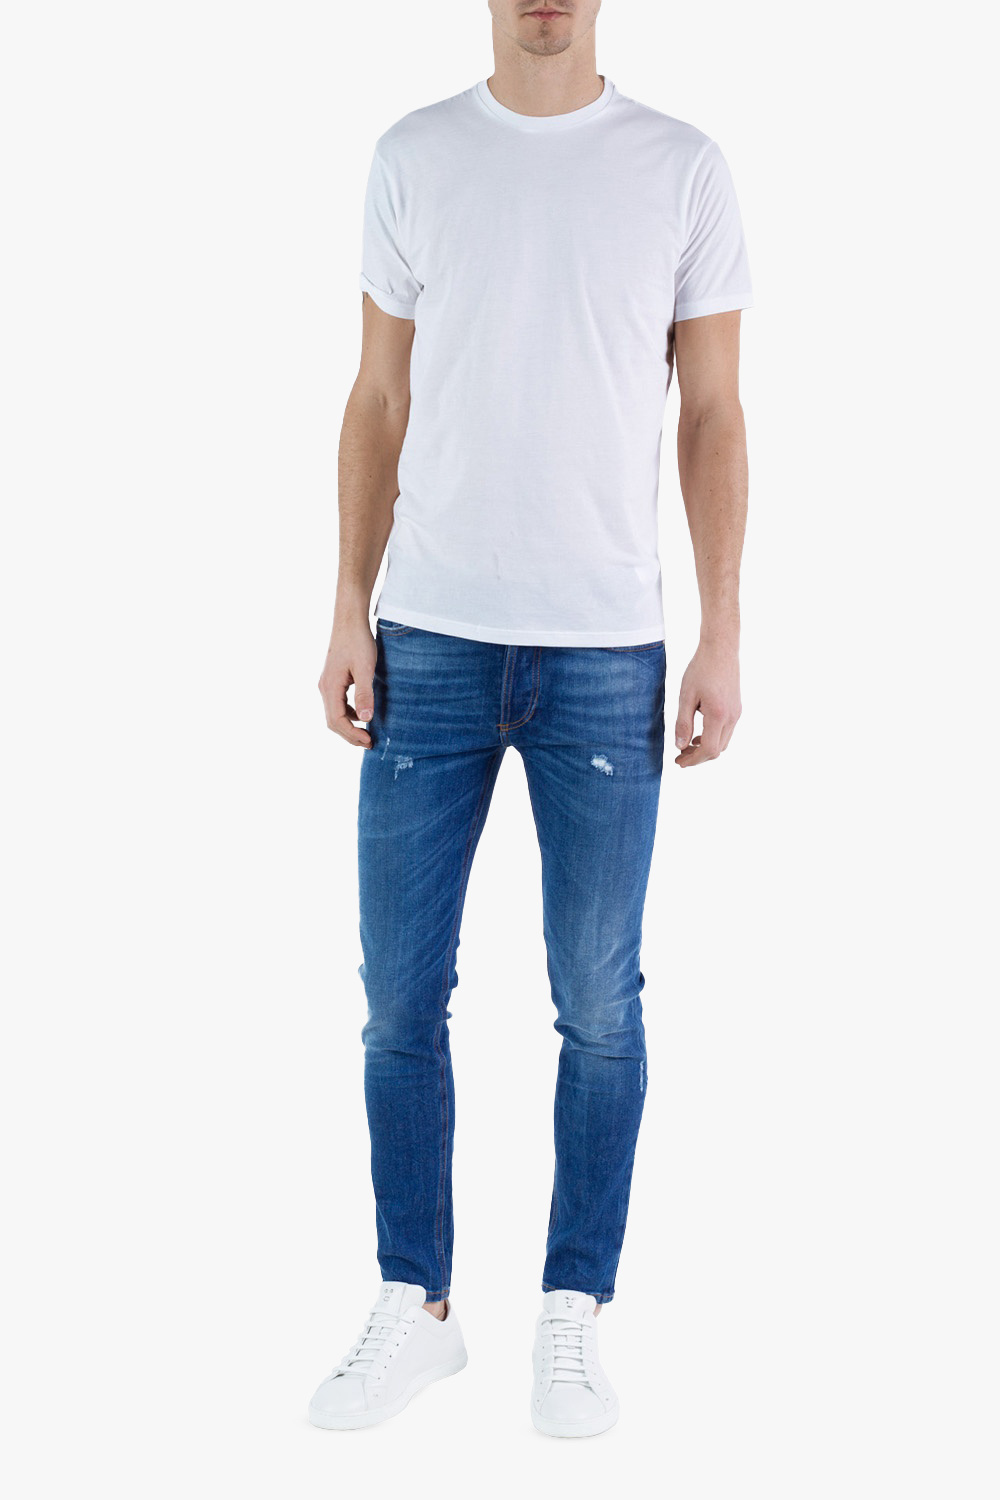 Emporio Armani T-shirt three-pack | Men's Clothing | Vitkac